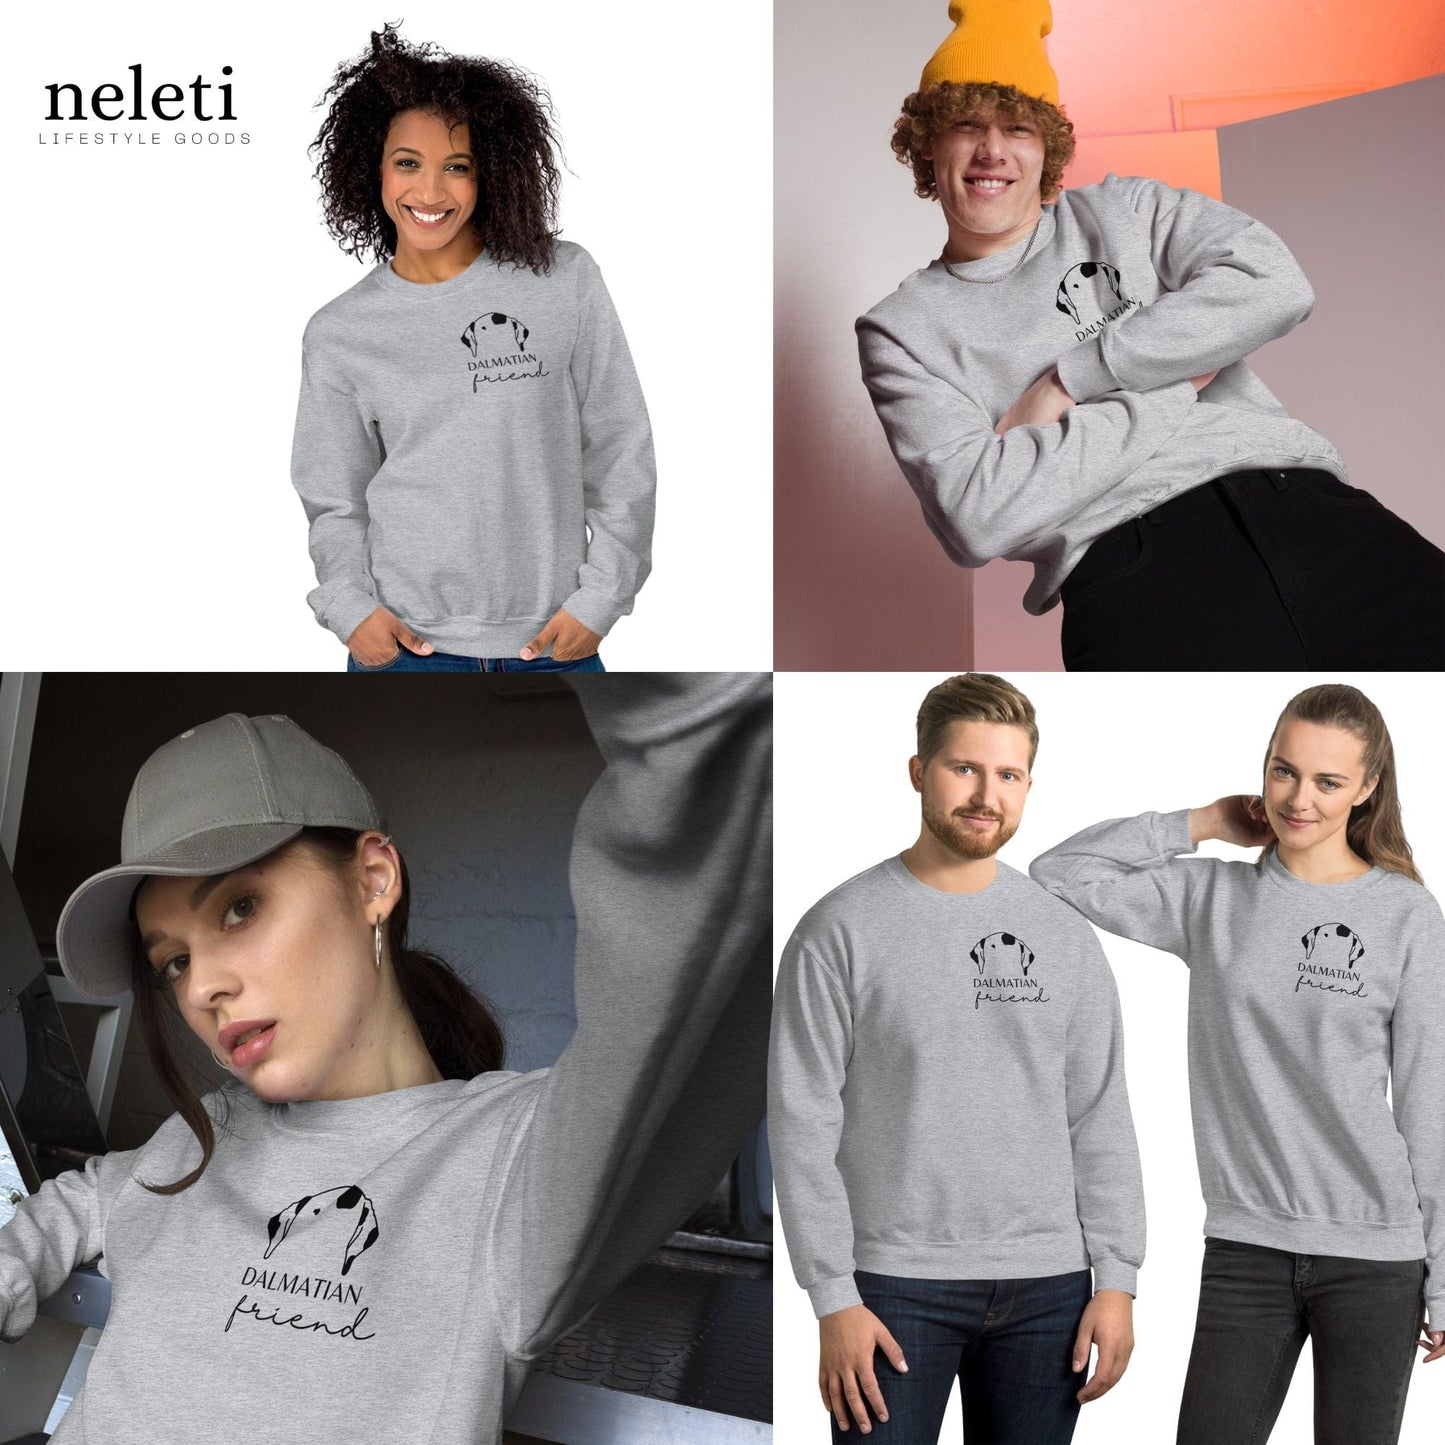    neleti.com-custom-gray-sweatshirt-with-dog-ears